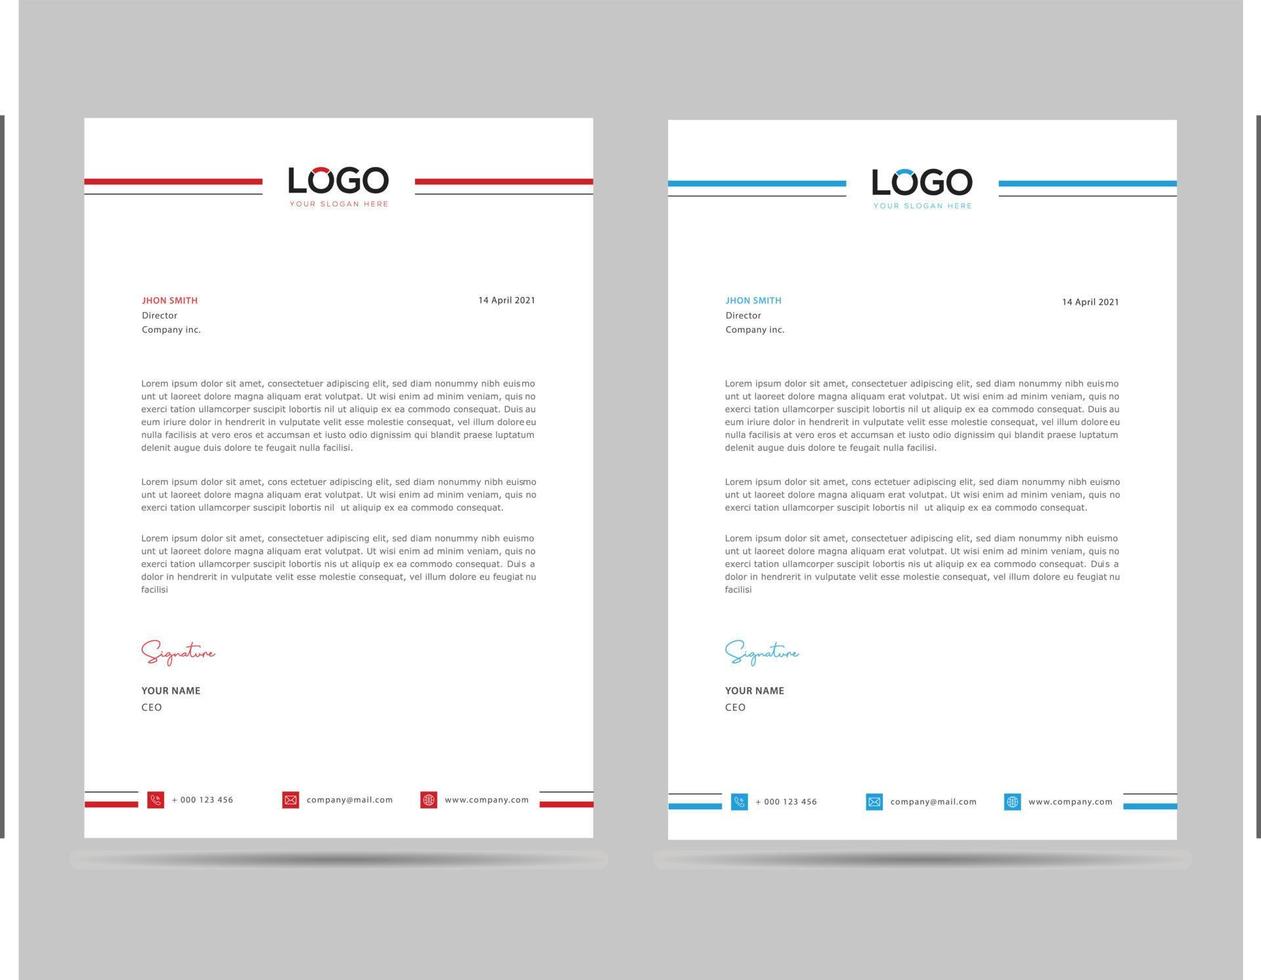 A4 Size Elegant letterhead template design in minimalist style. vector